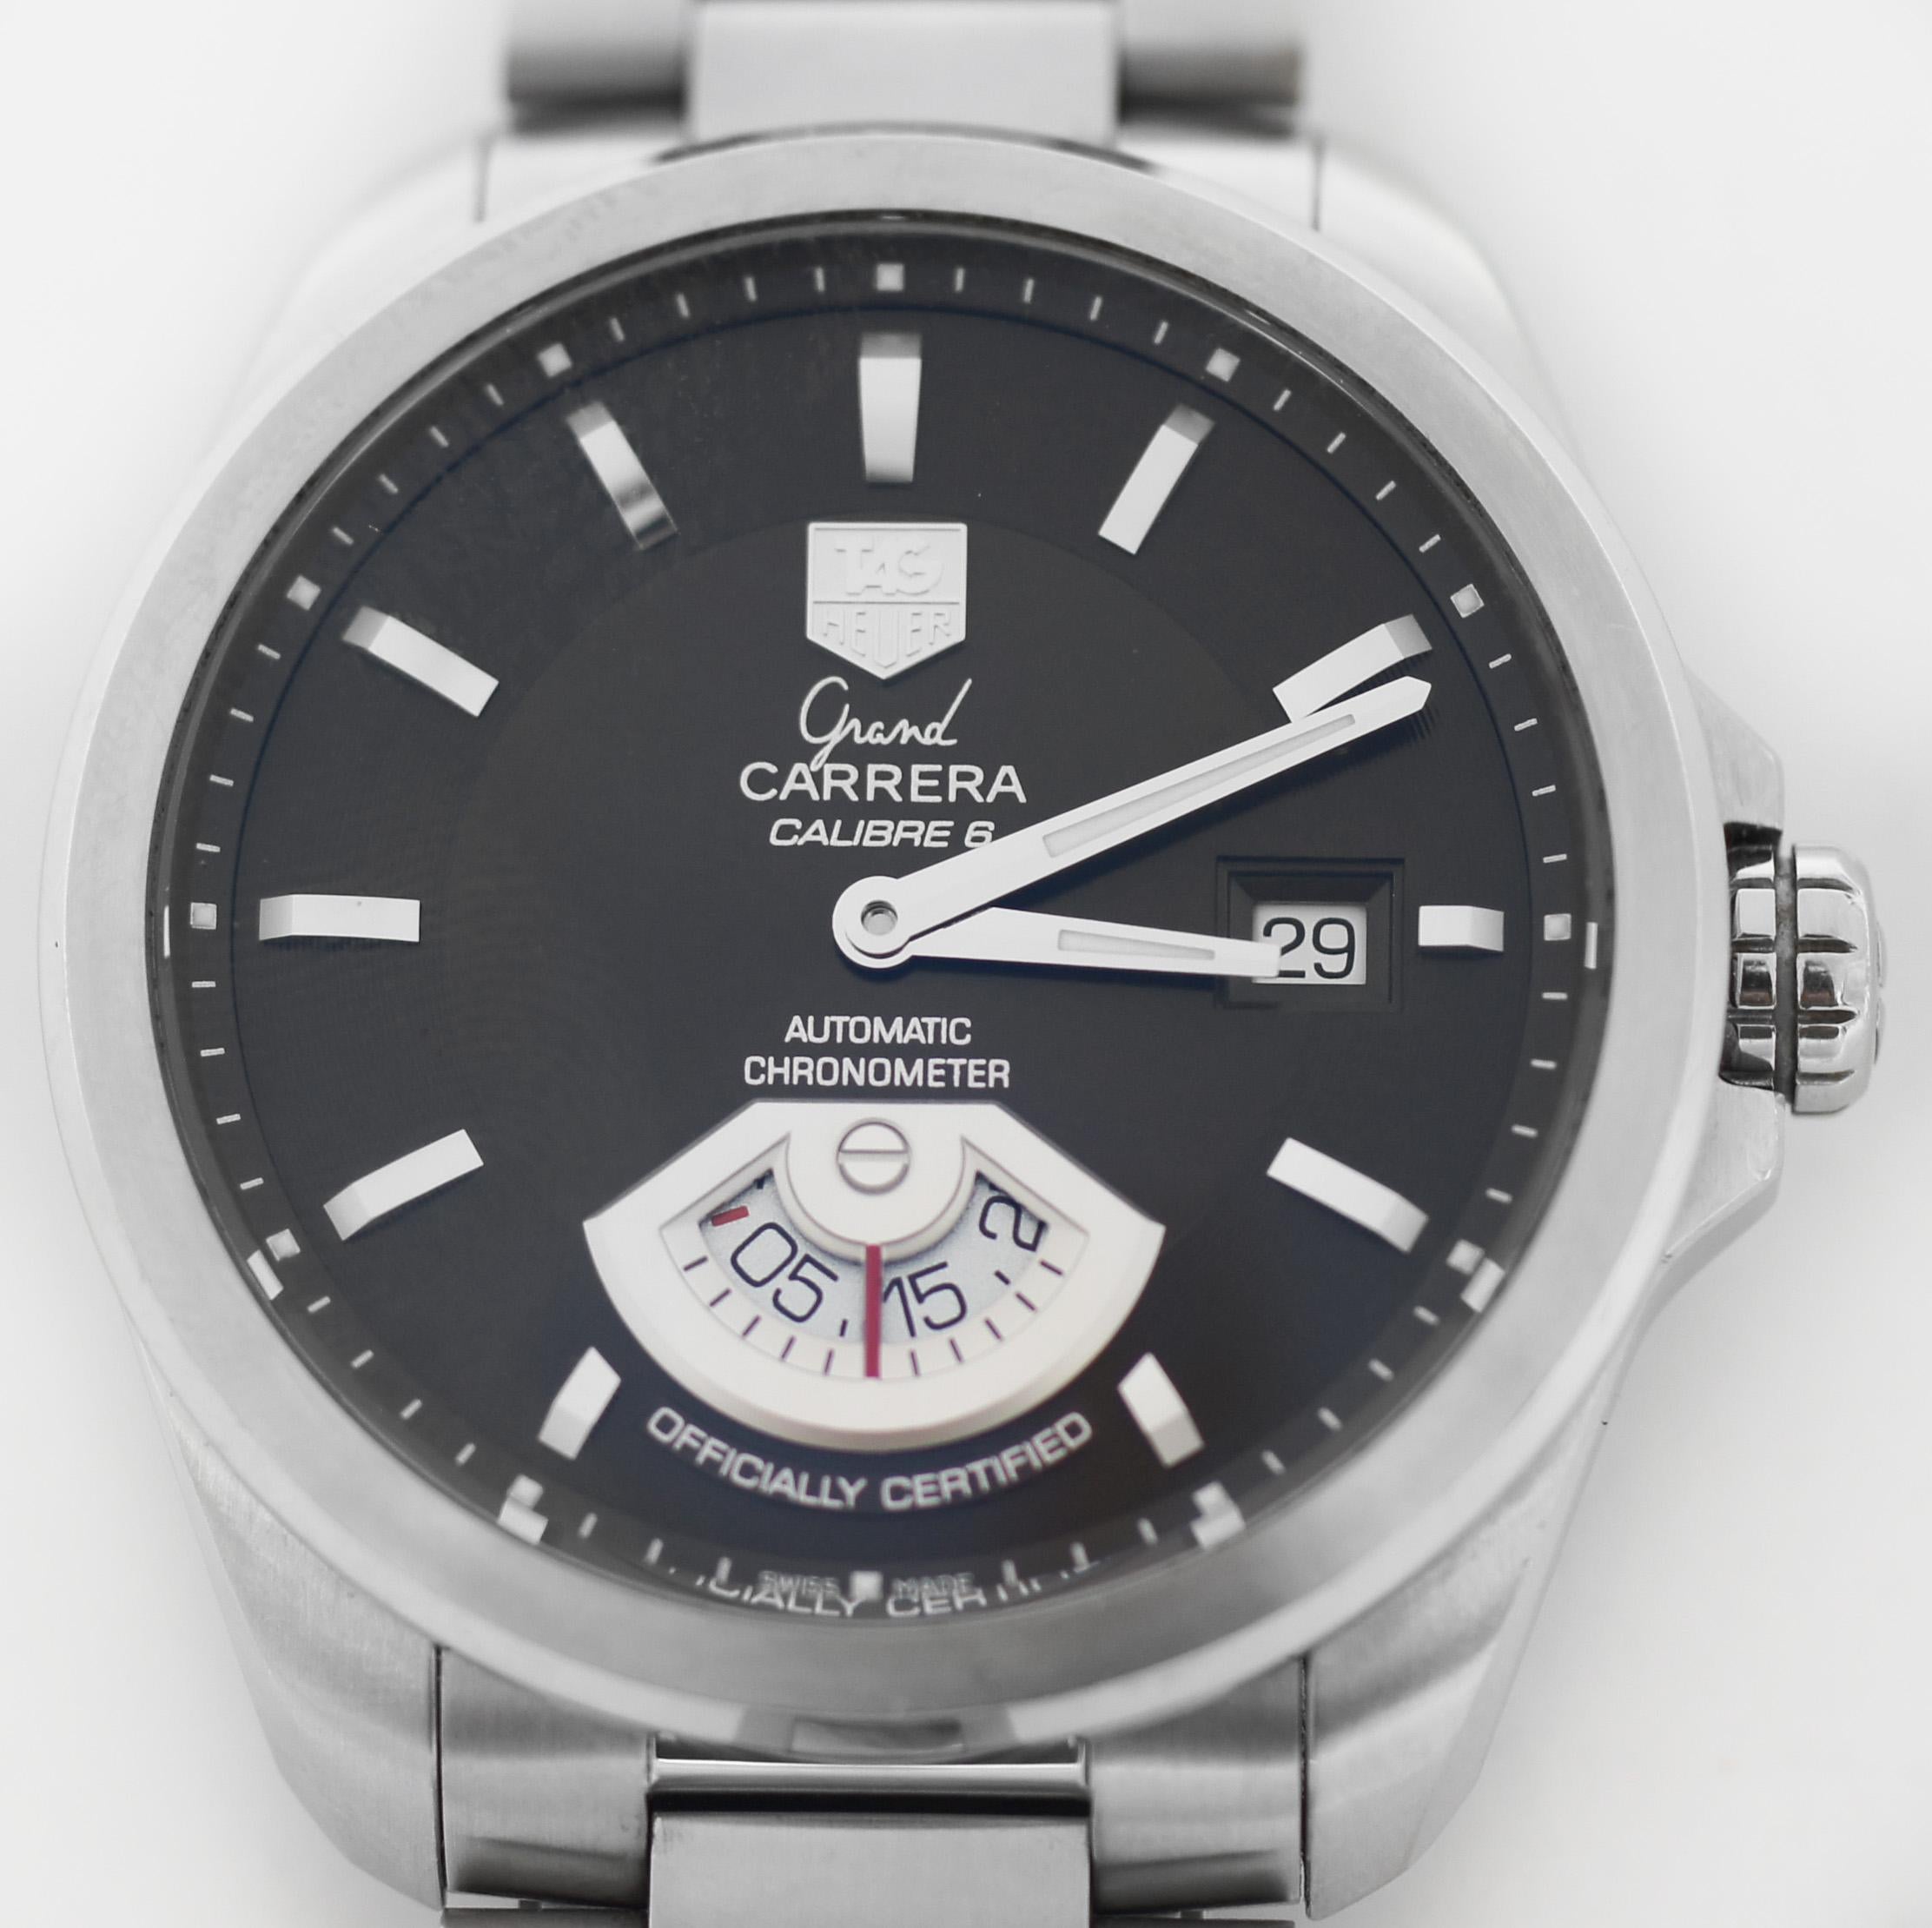 grand carrera watch 1860 price